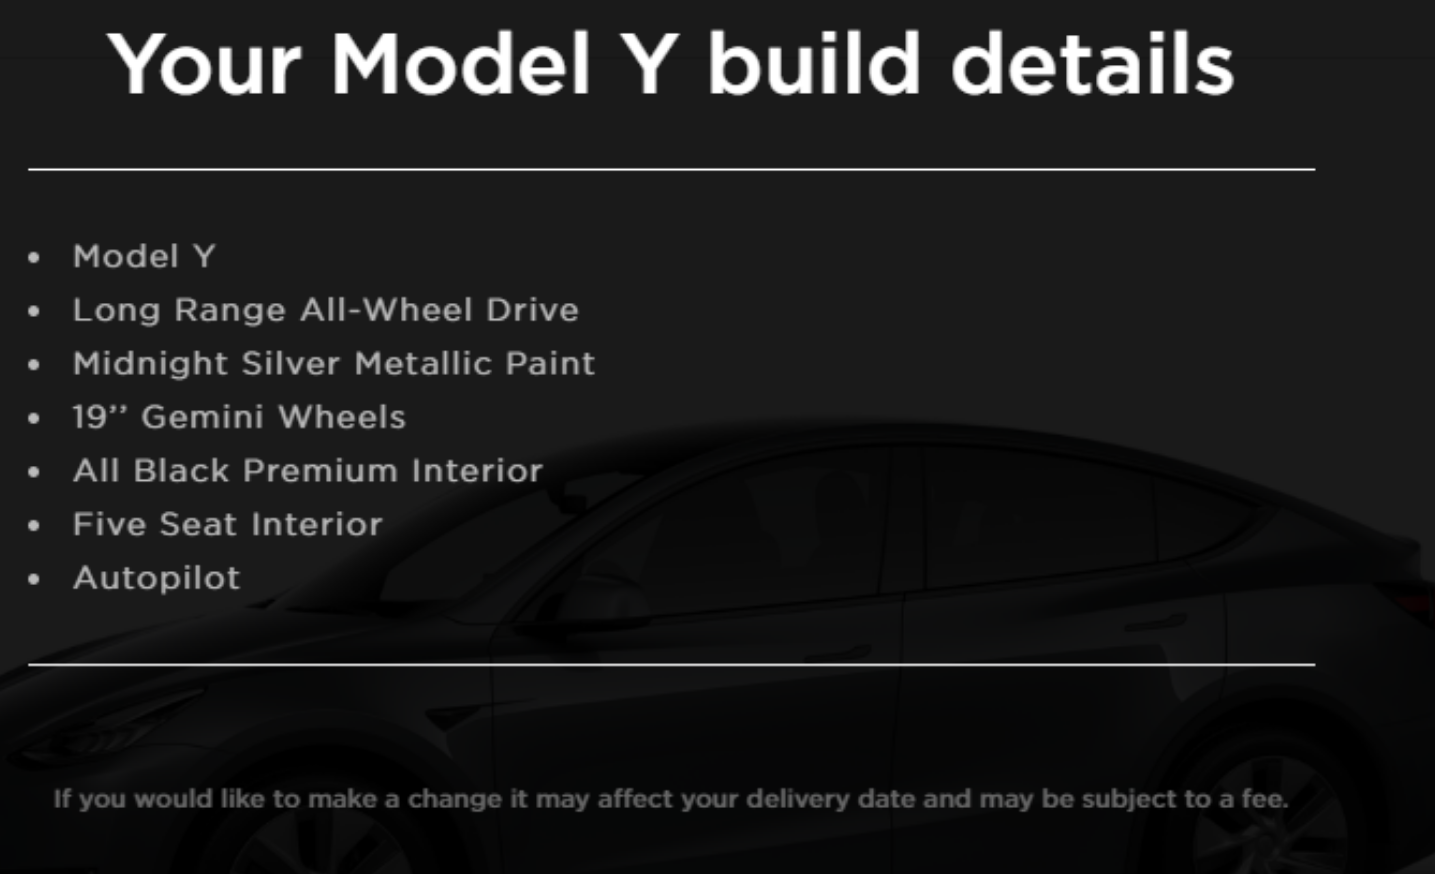 Model Y build details